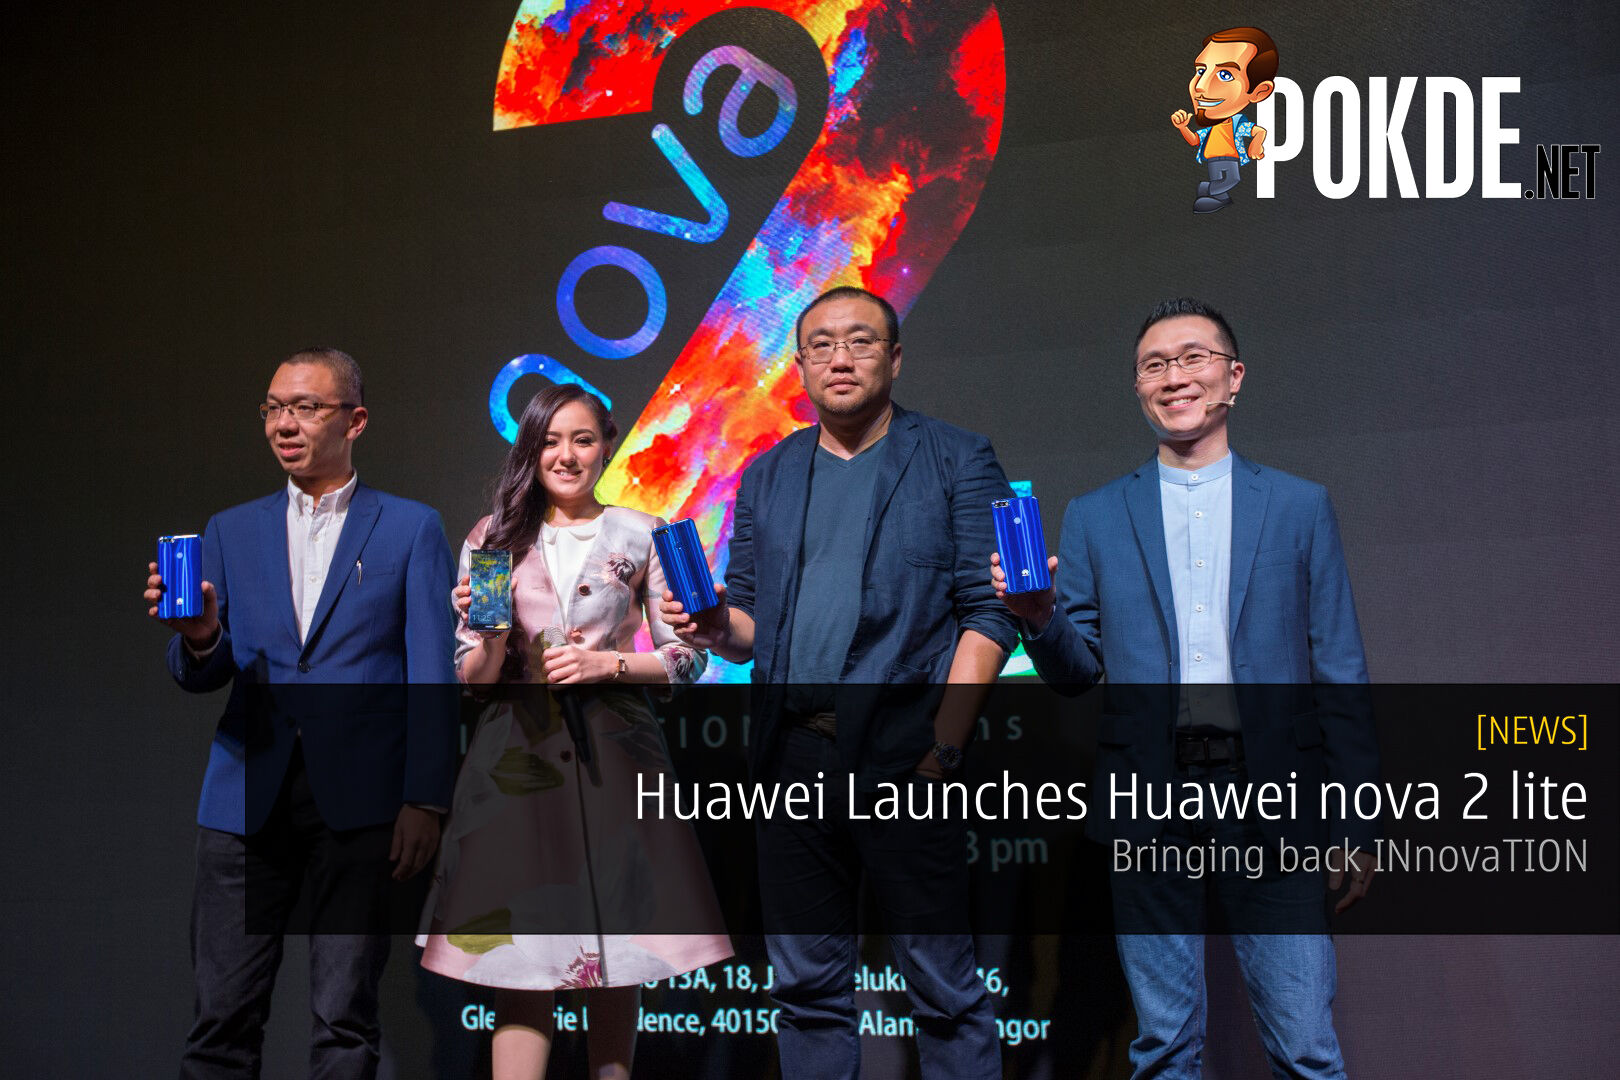 Huawei Launches Huawei nova 2 lite - Bringing back INnovaTION 37